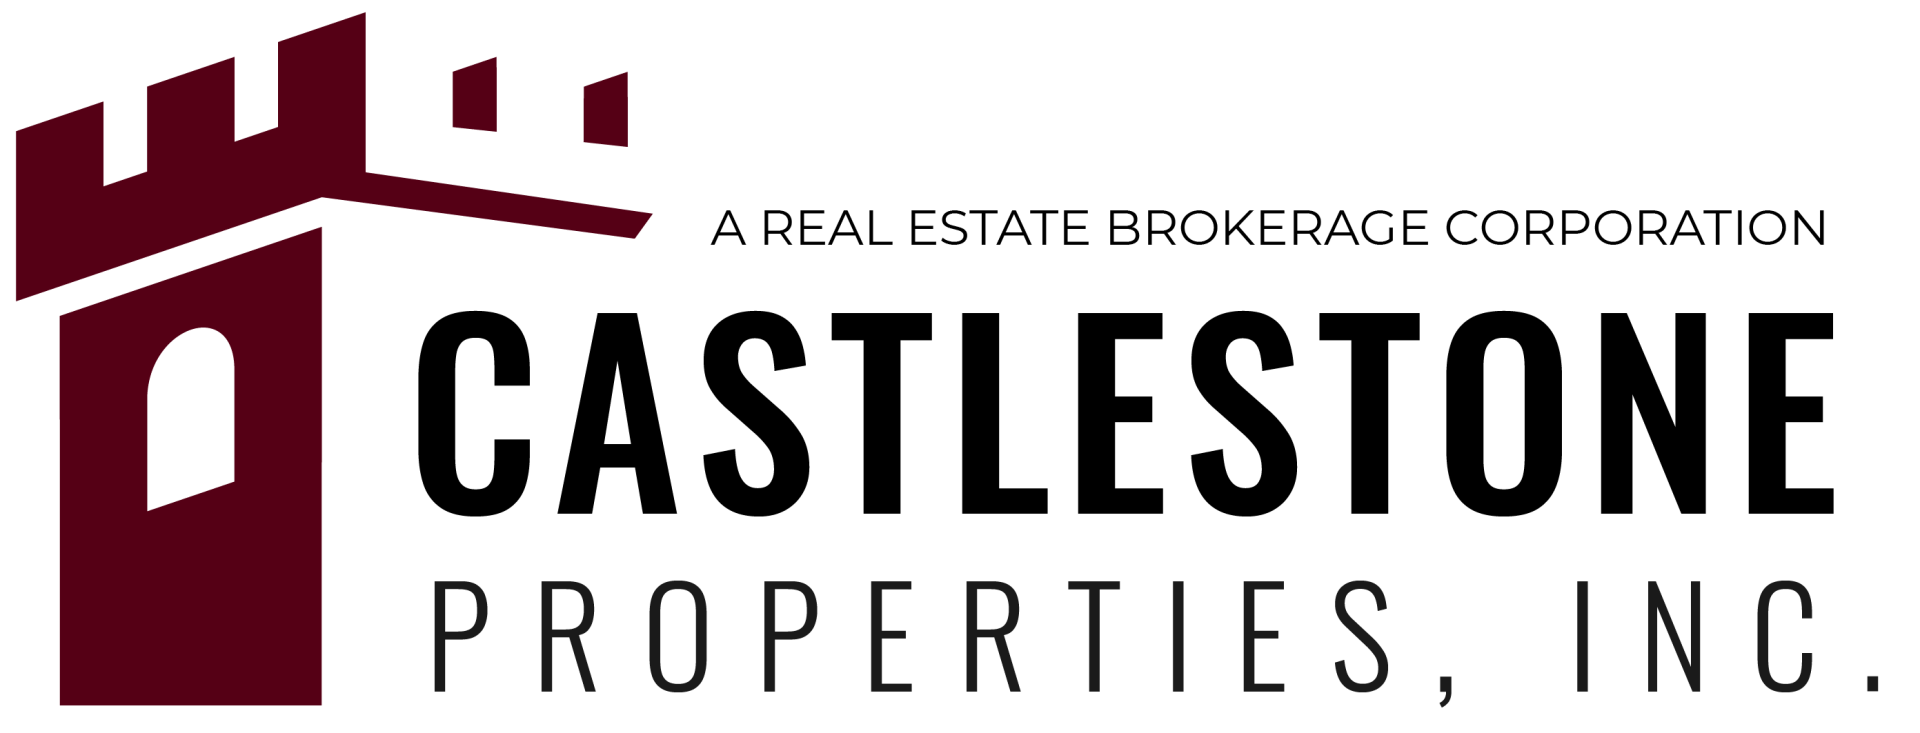 Castlestone Properties Logo